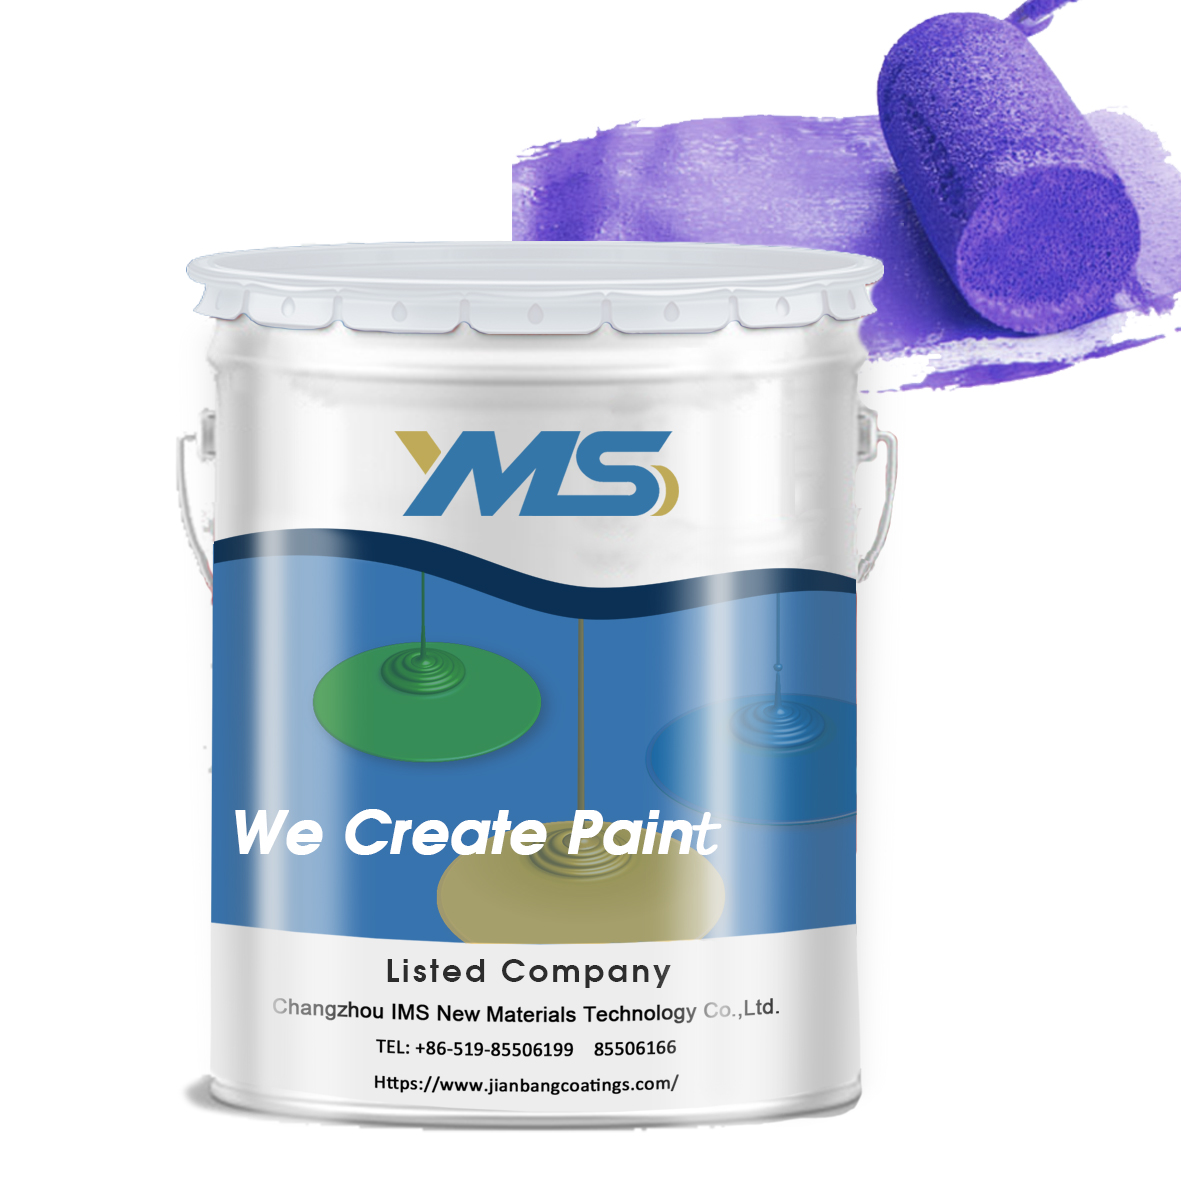 YMS Paint Array image33